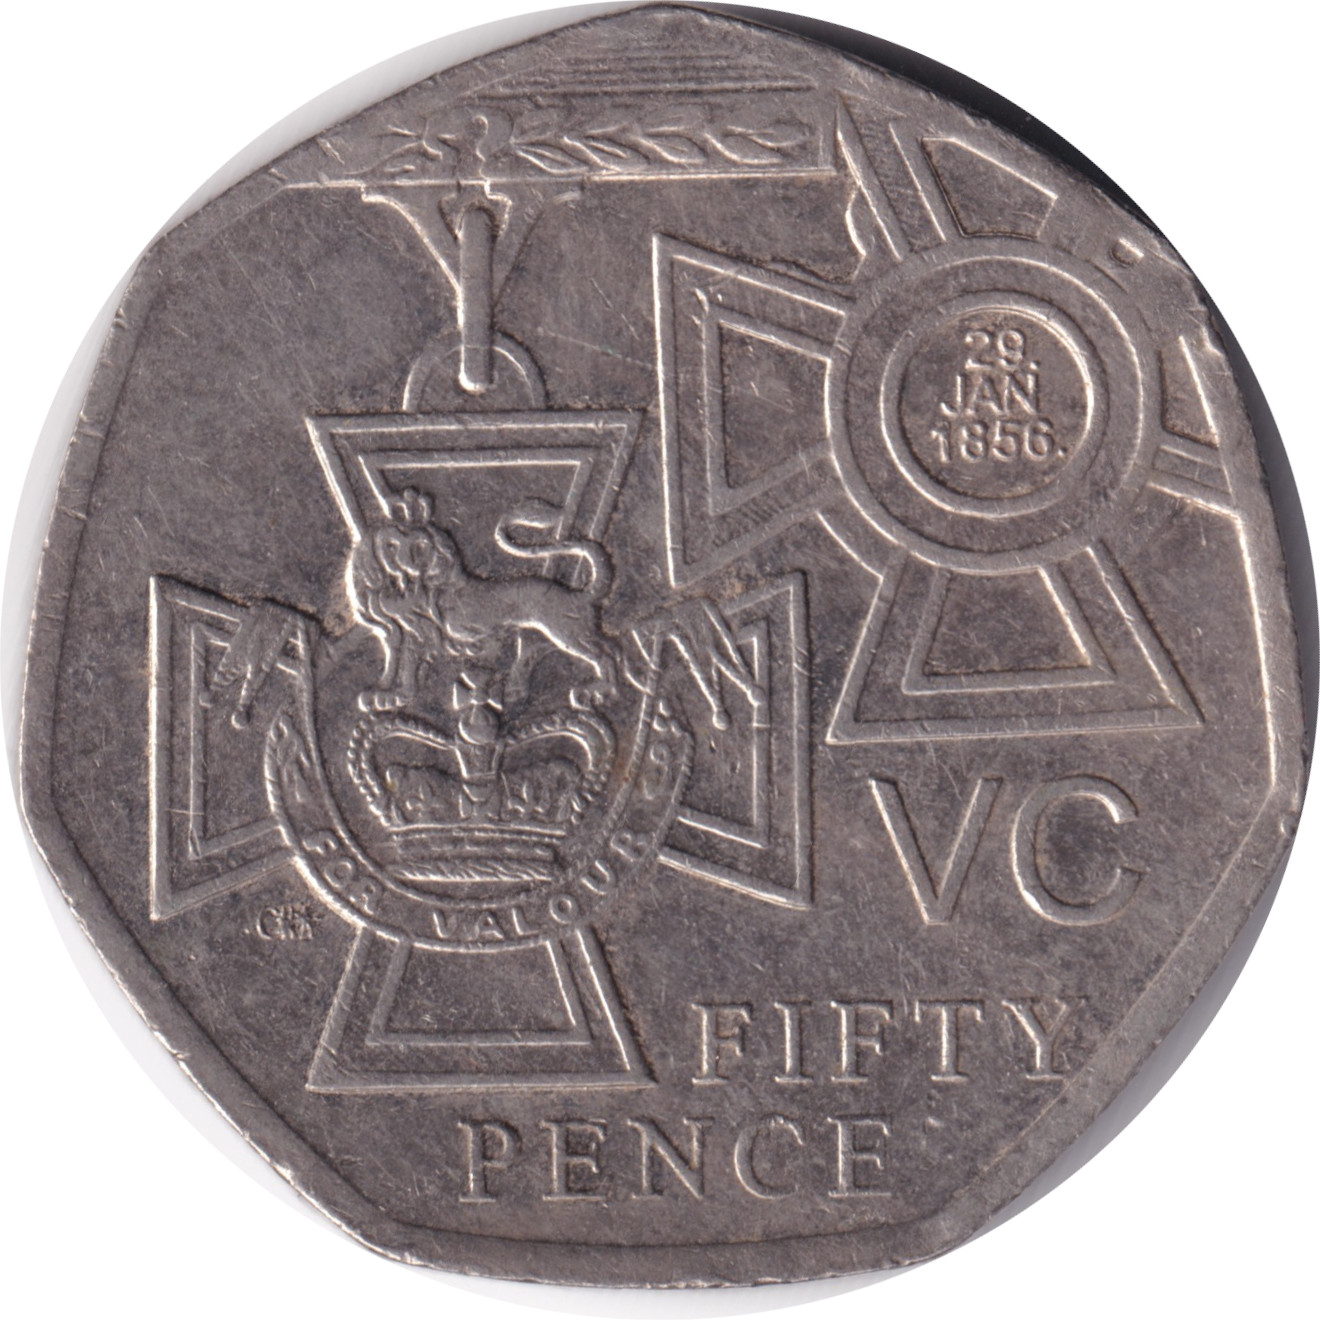 50 pence - Victoria Cross